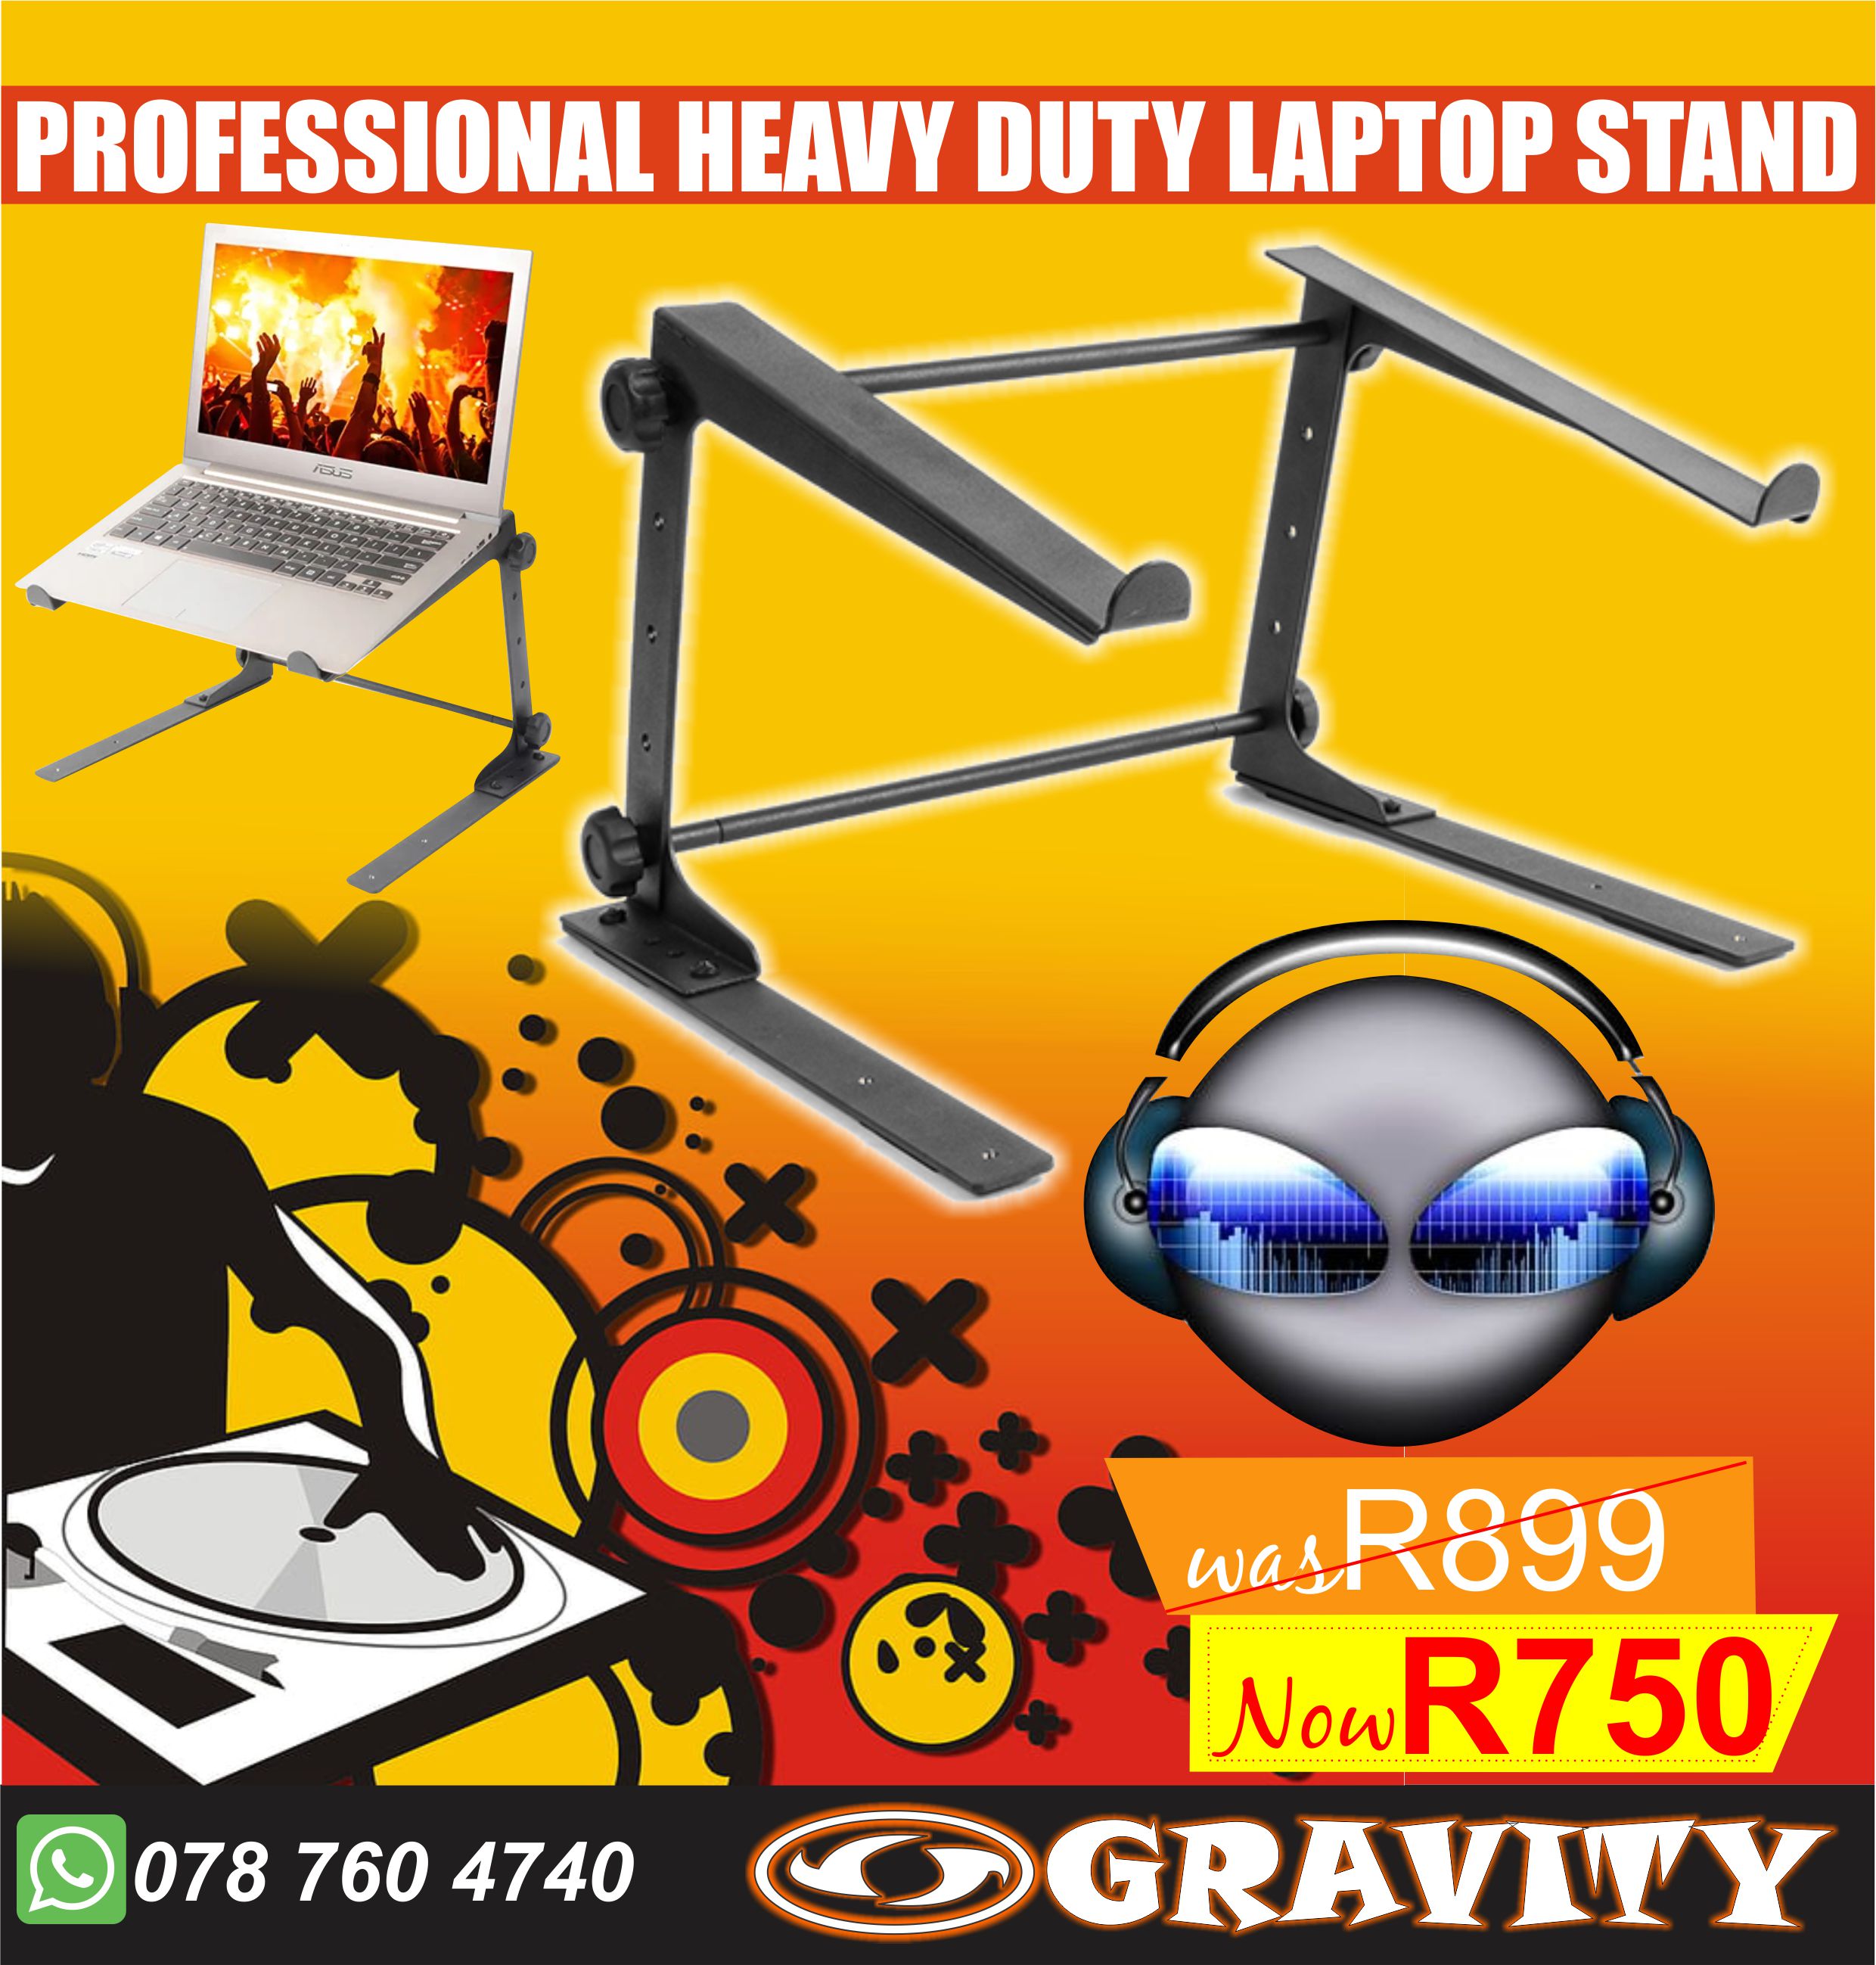 dj laptop stand durban | dj laptop stand for dj controller durban 